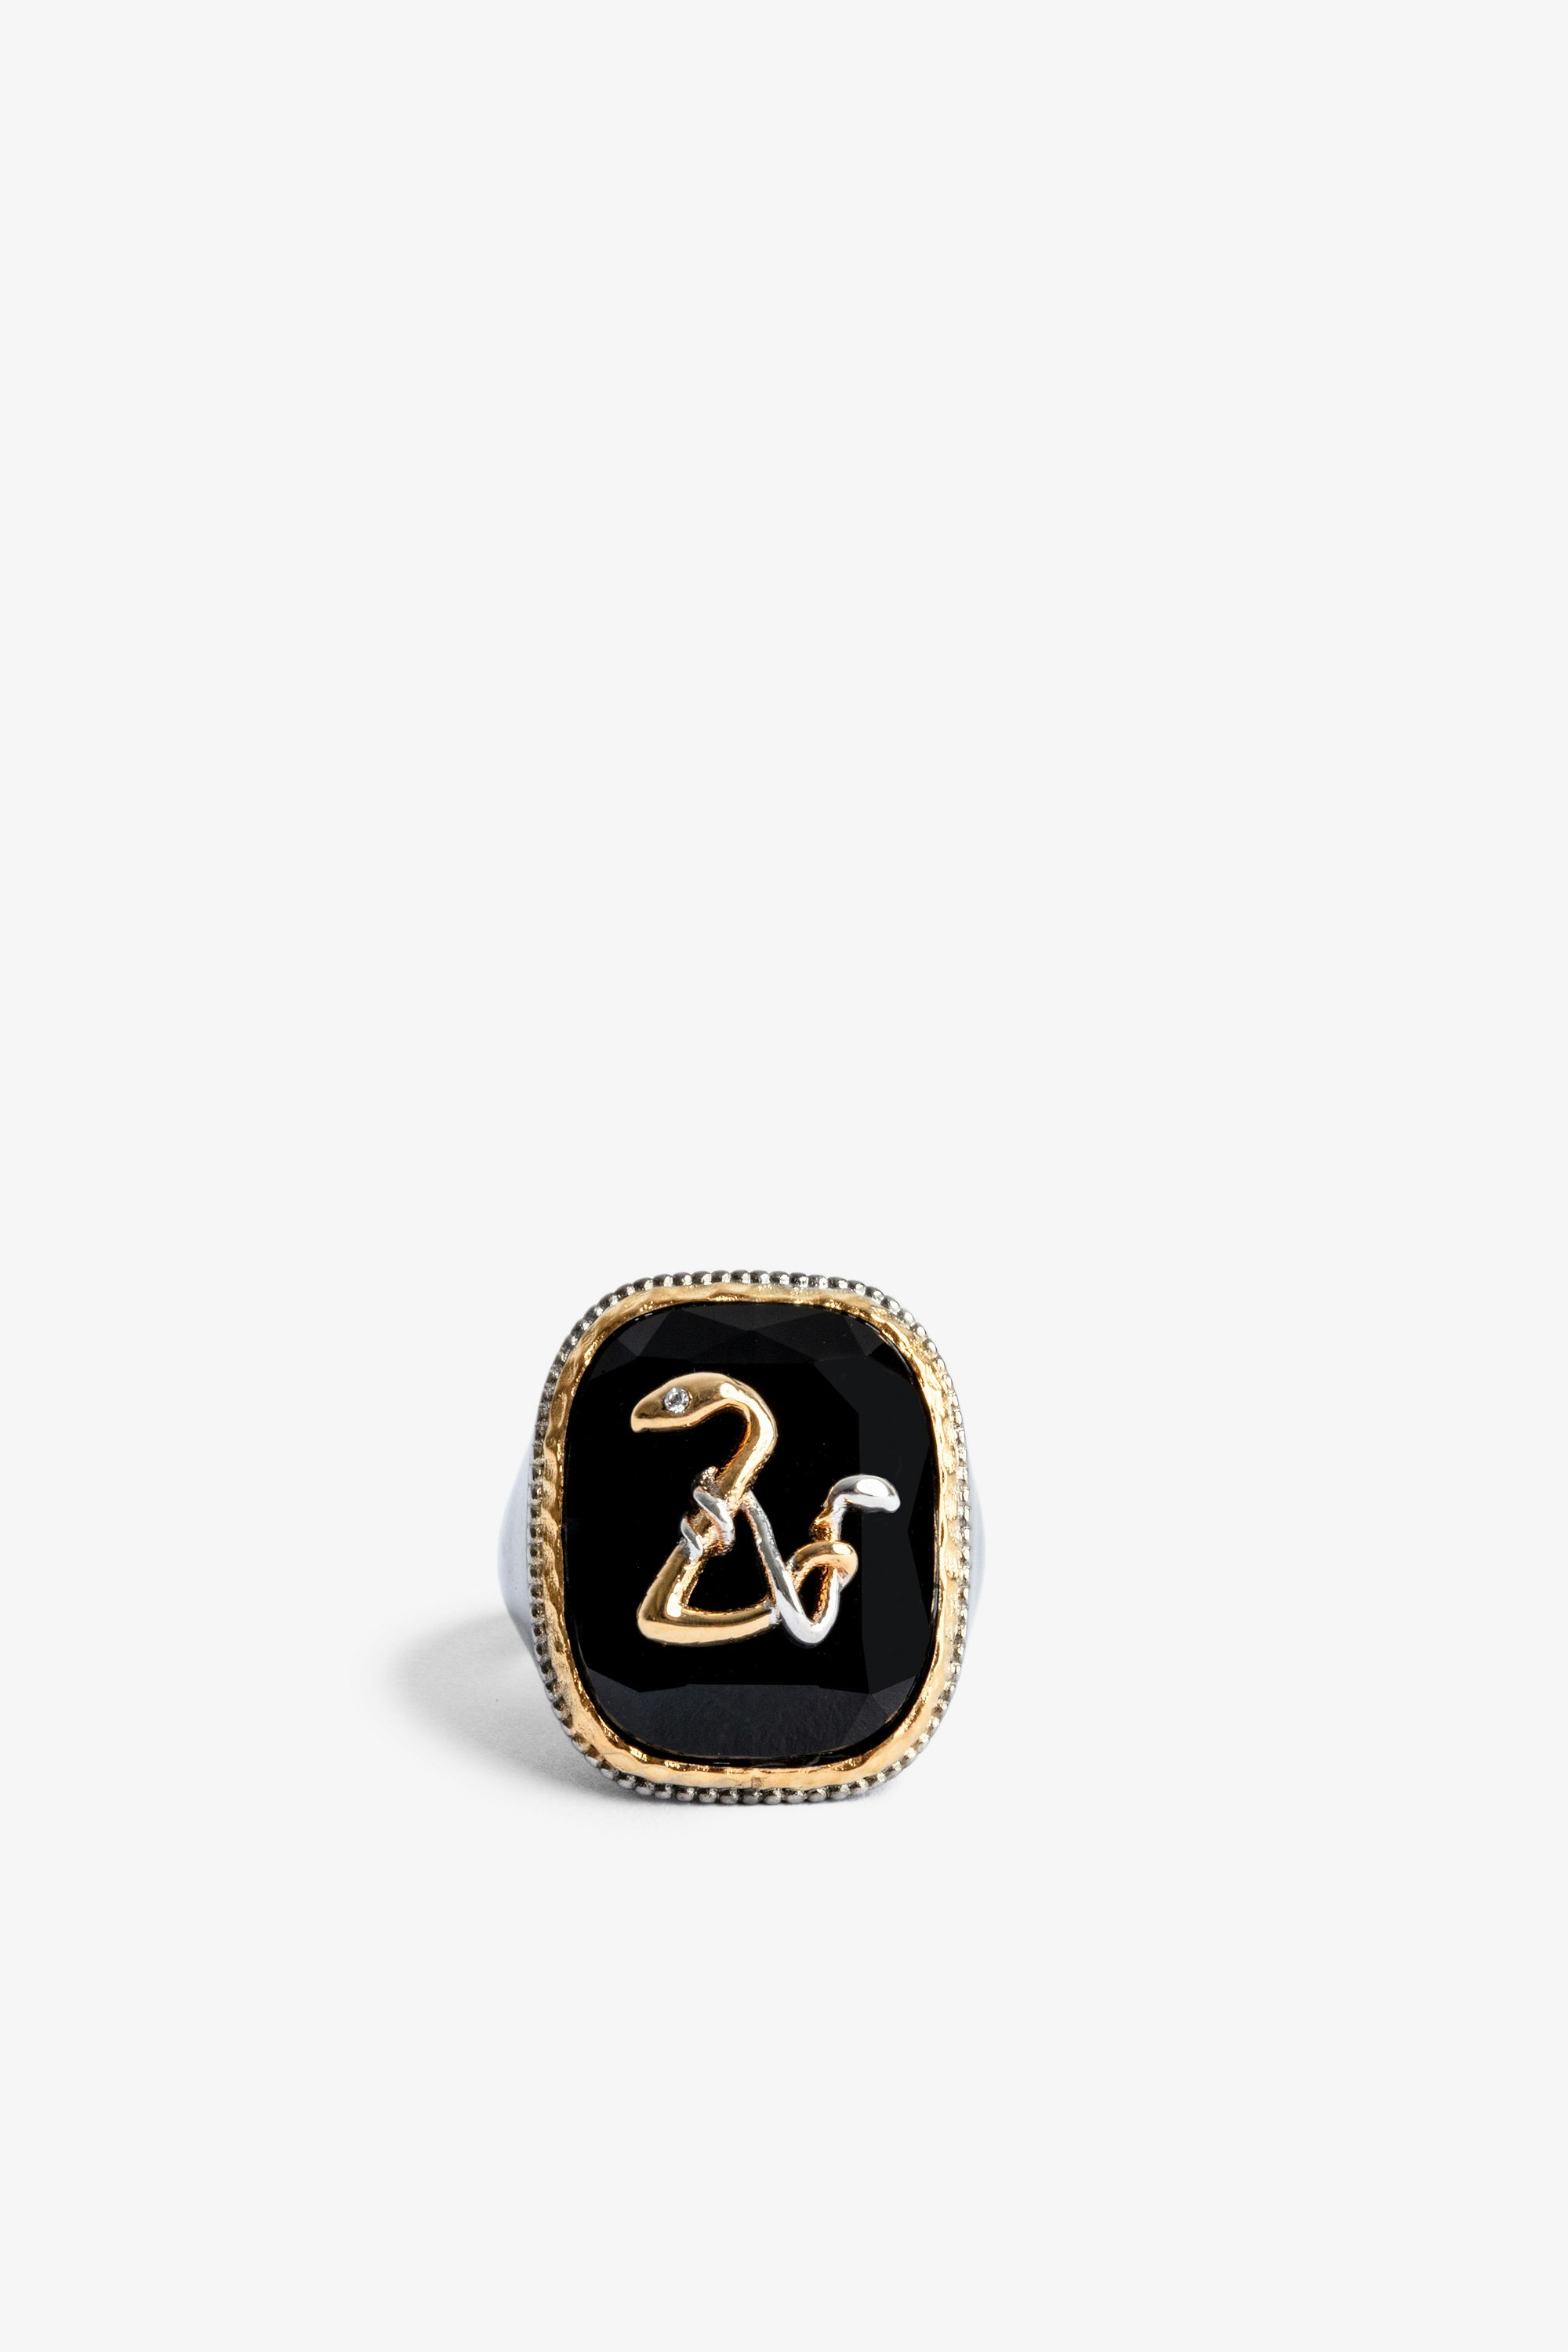 ZV Snake Signet Ring Women’s blackened and gold-tone metal signet ring